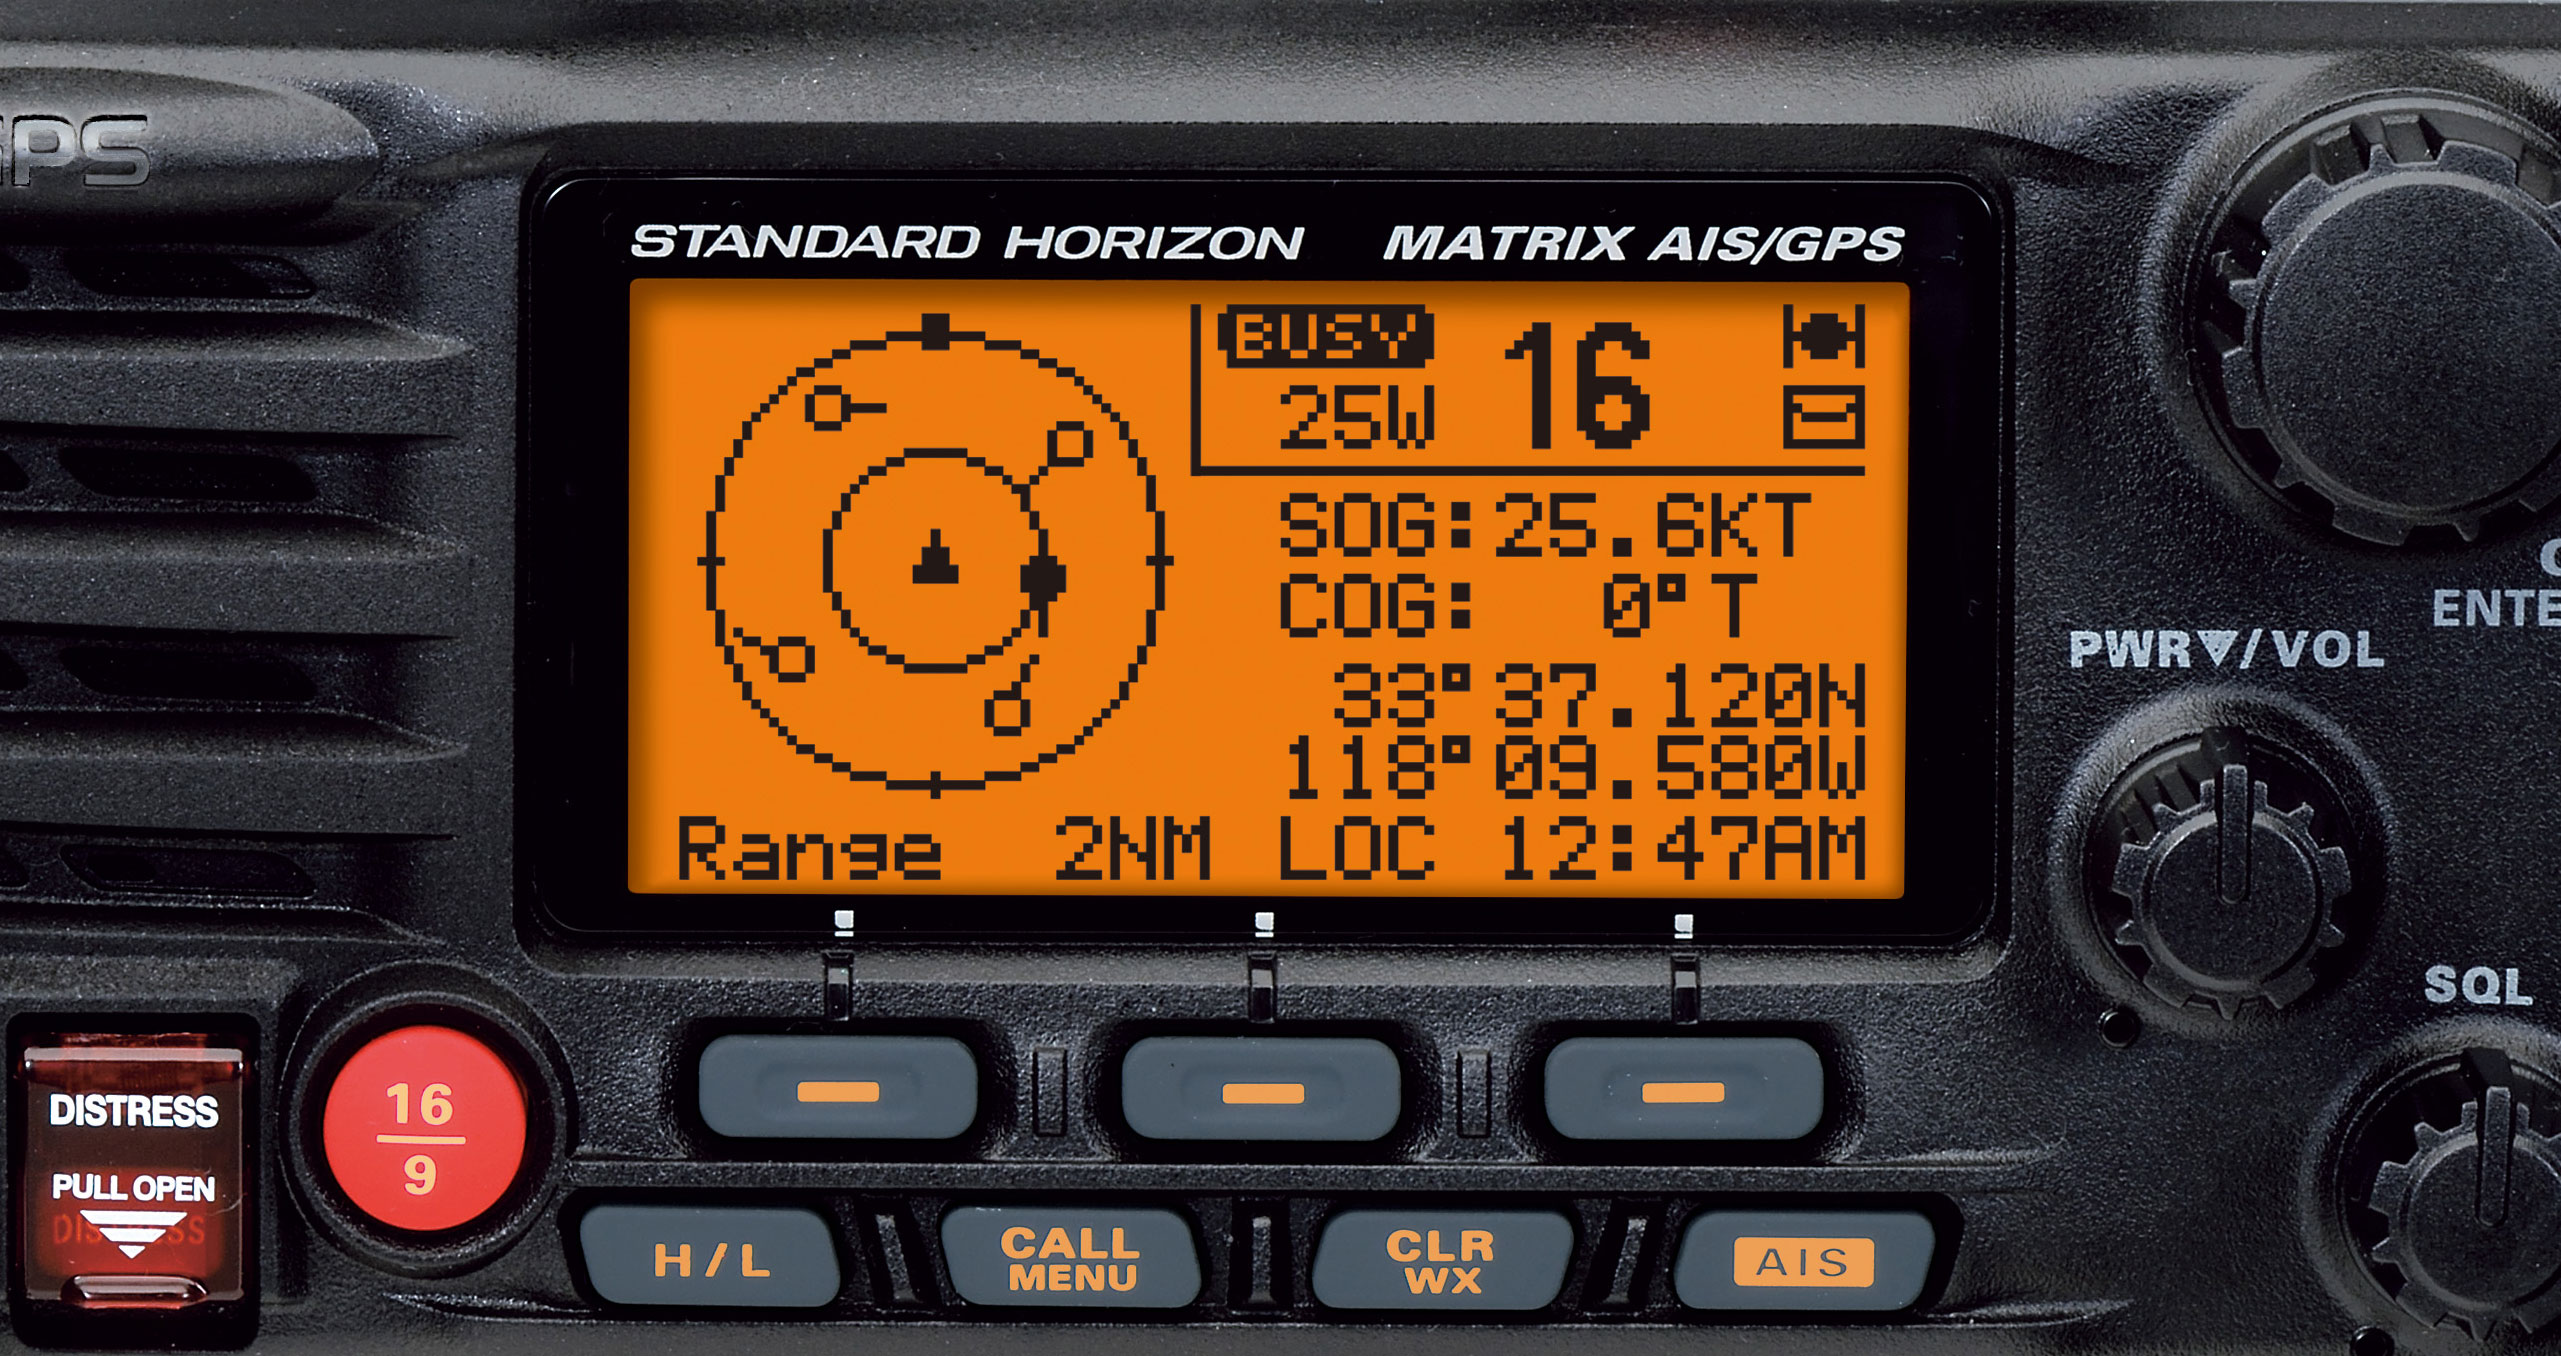 VHF radio med AIS modtager